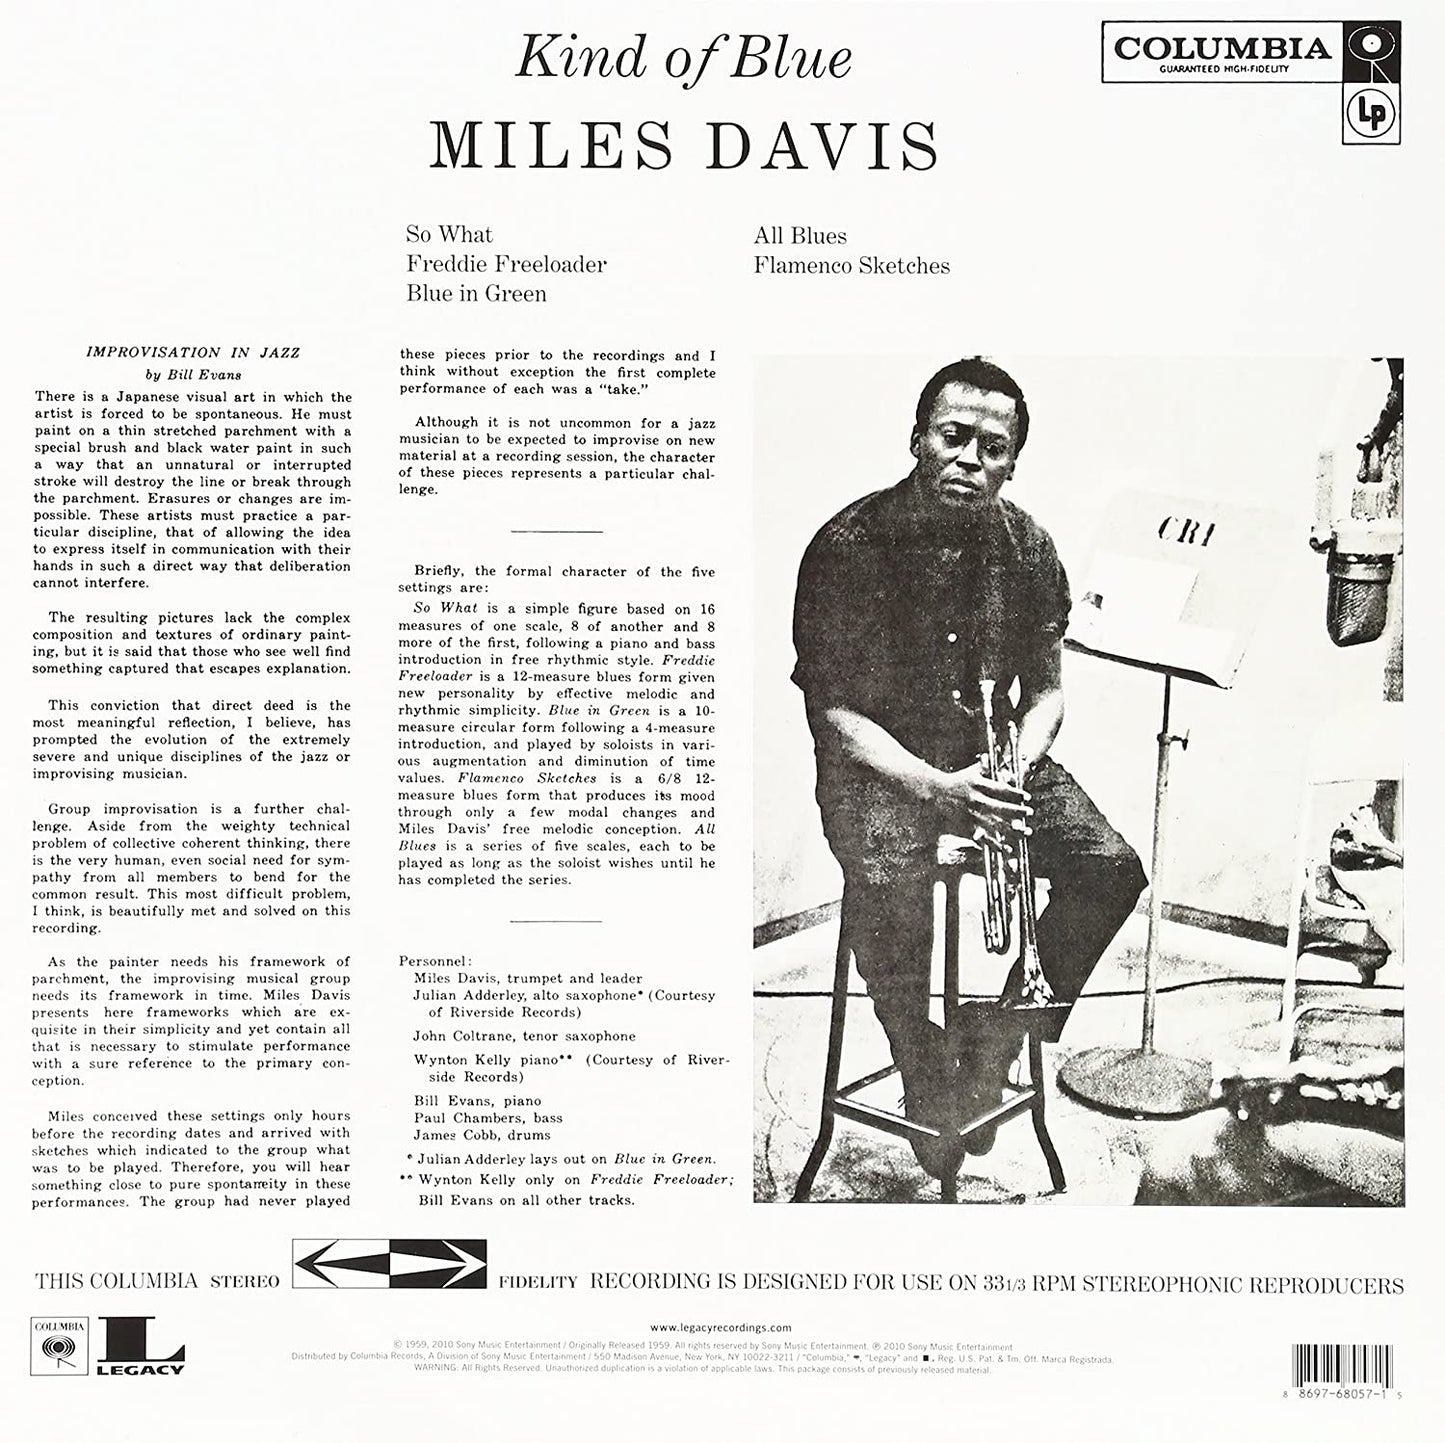 MILES DAVIS: KIND OF BLUE (180 GRAM VINYL LP)